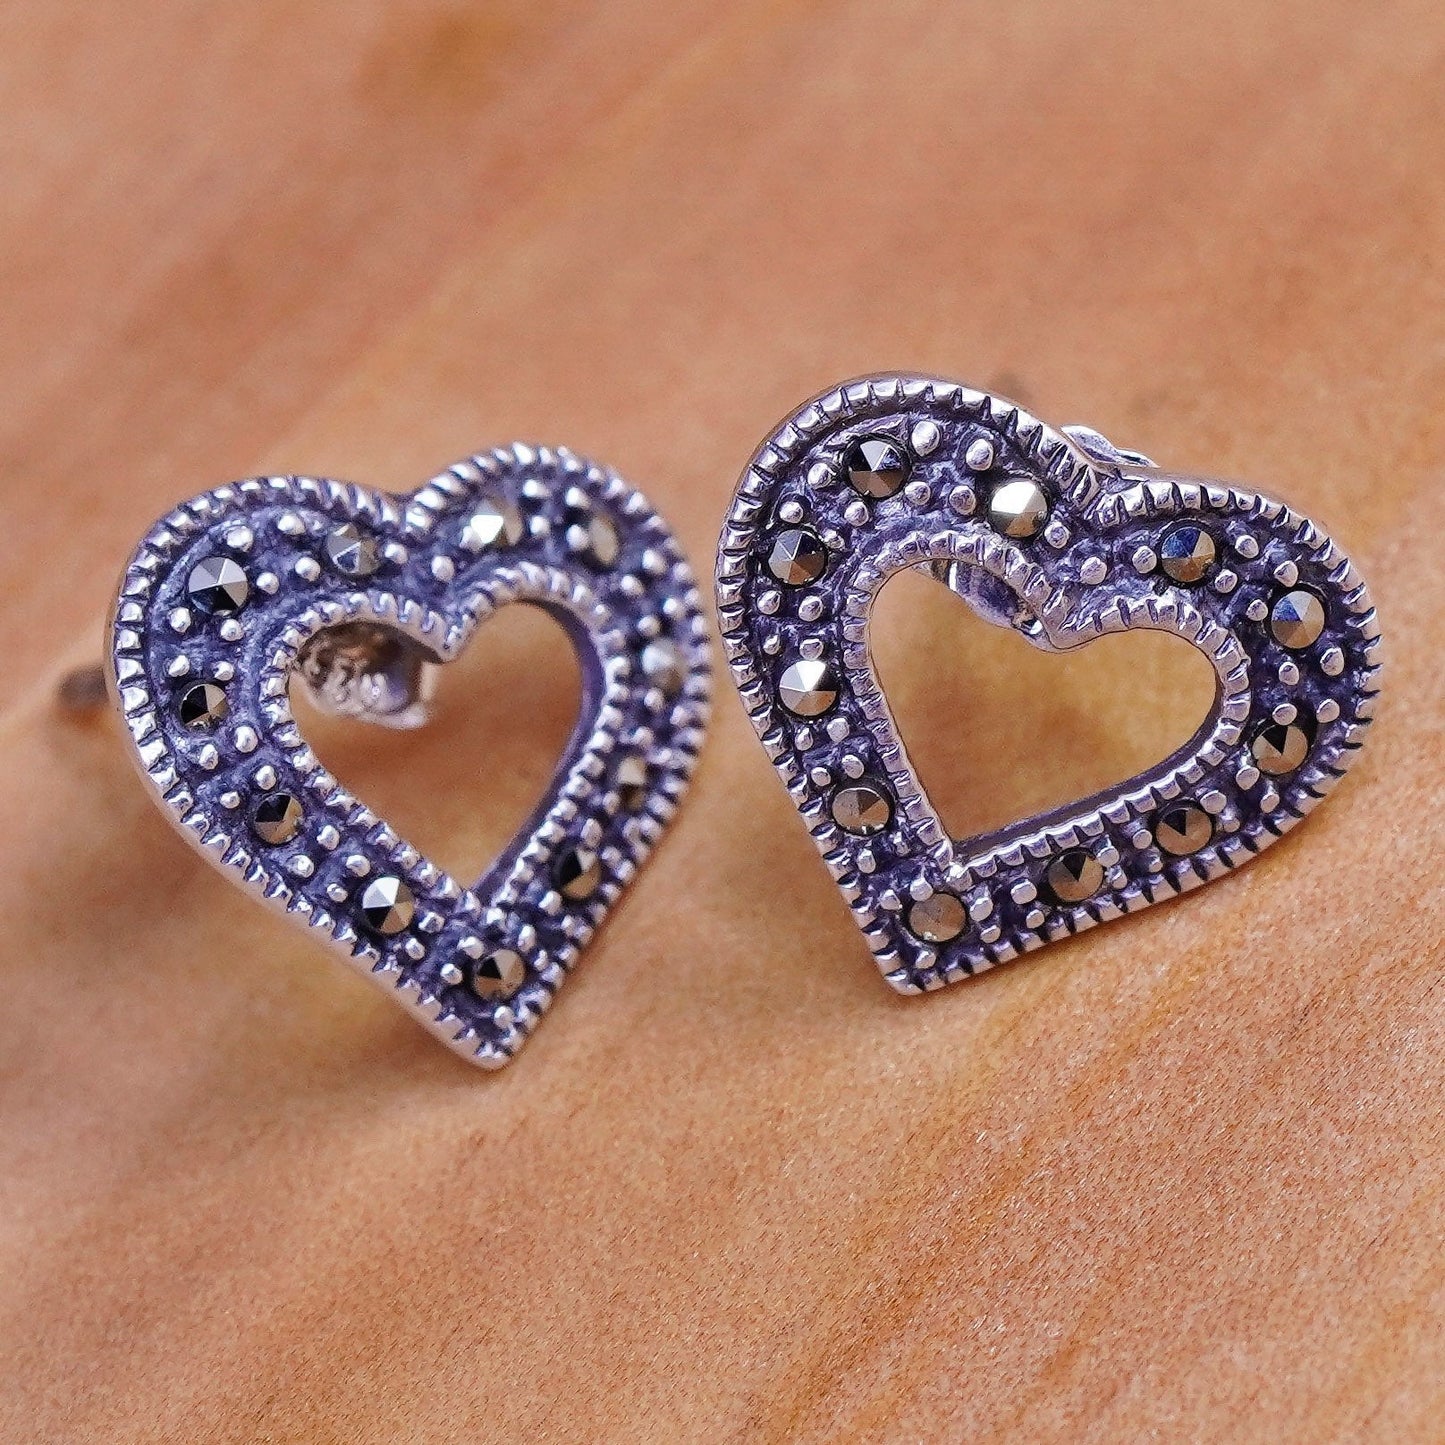 Vintage Sterling silver handmade earrings, Mexico 925 heart studs w/ marcasite